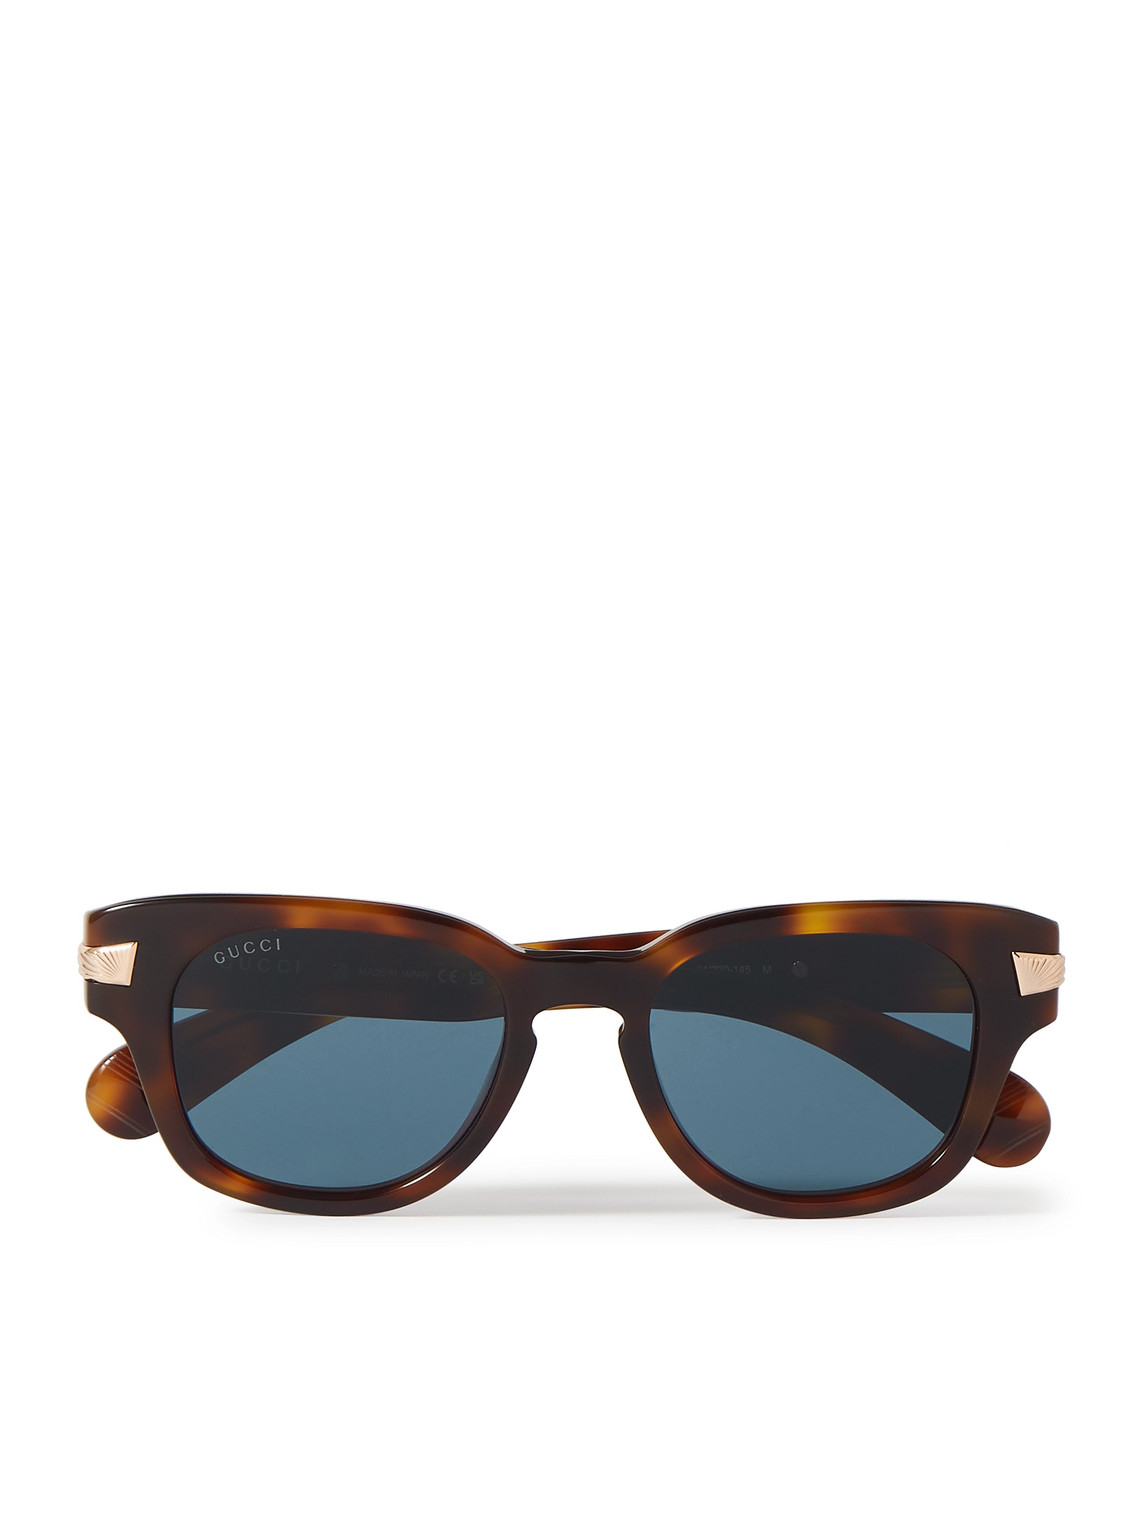 D-Frame Tortoiseshell Acetate and Gold-Tone Sunglasses